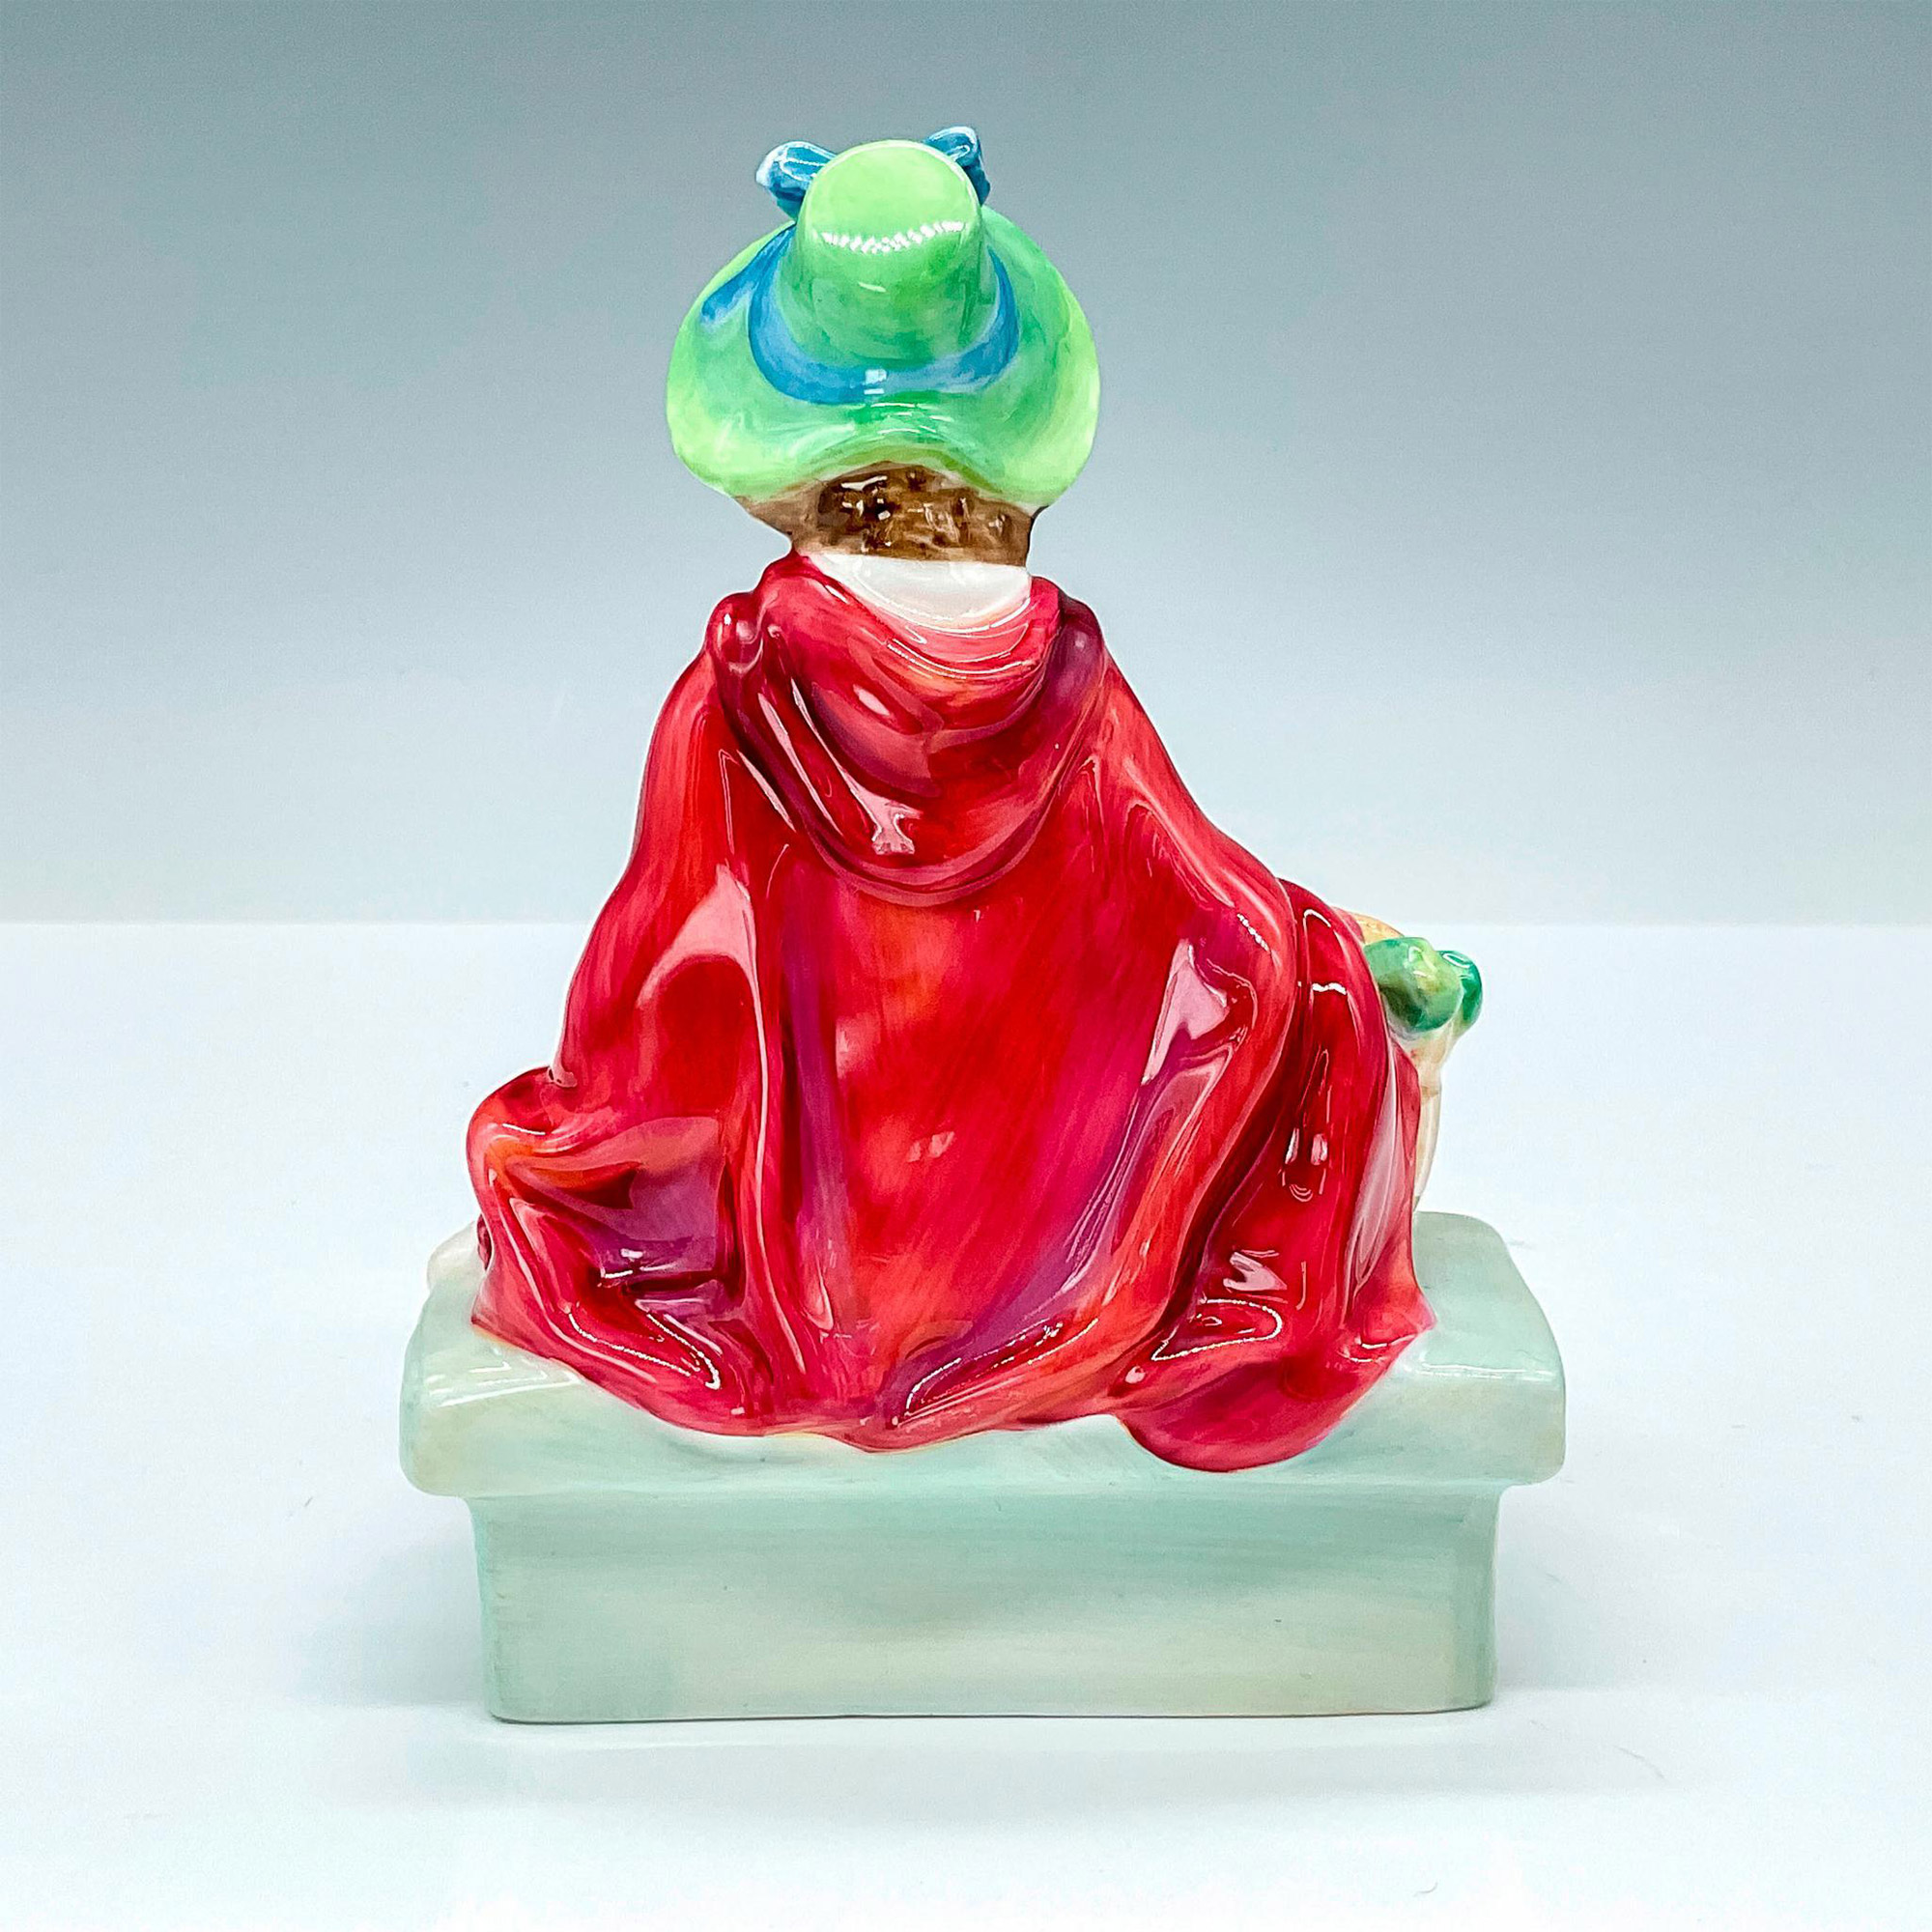 Linda HN2106 - Royal Doulton Figurine - Image 2 of 3